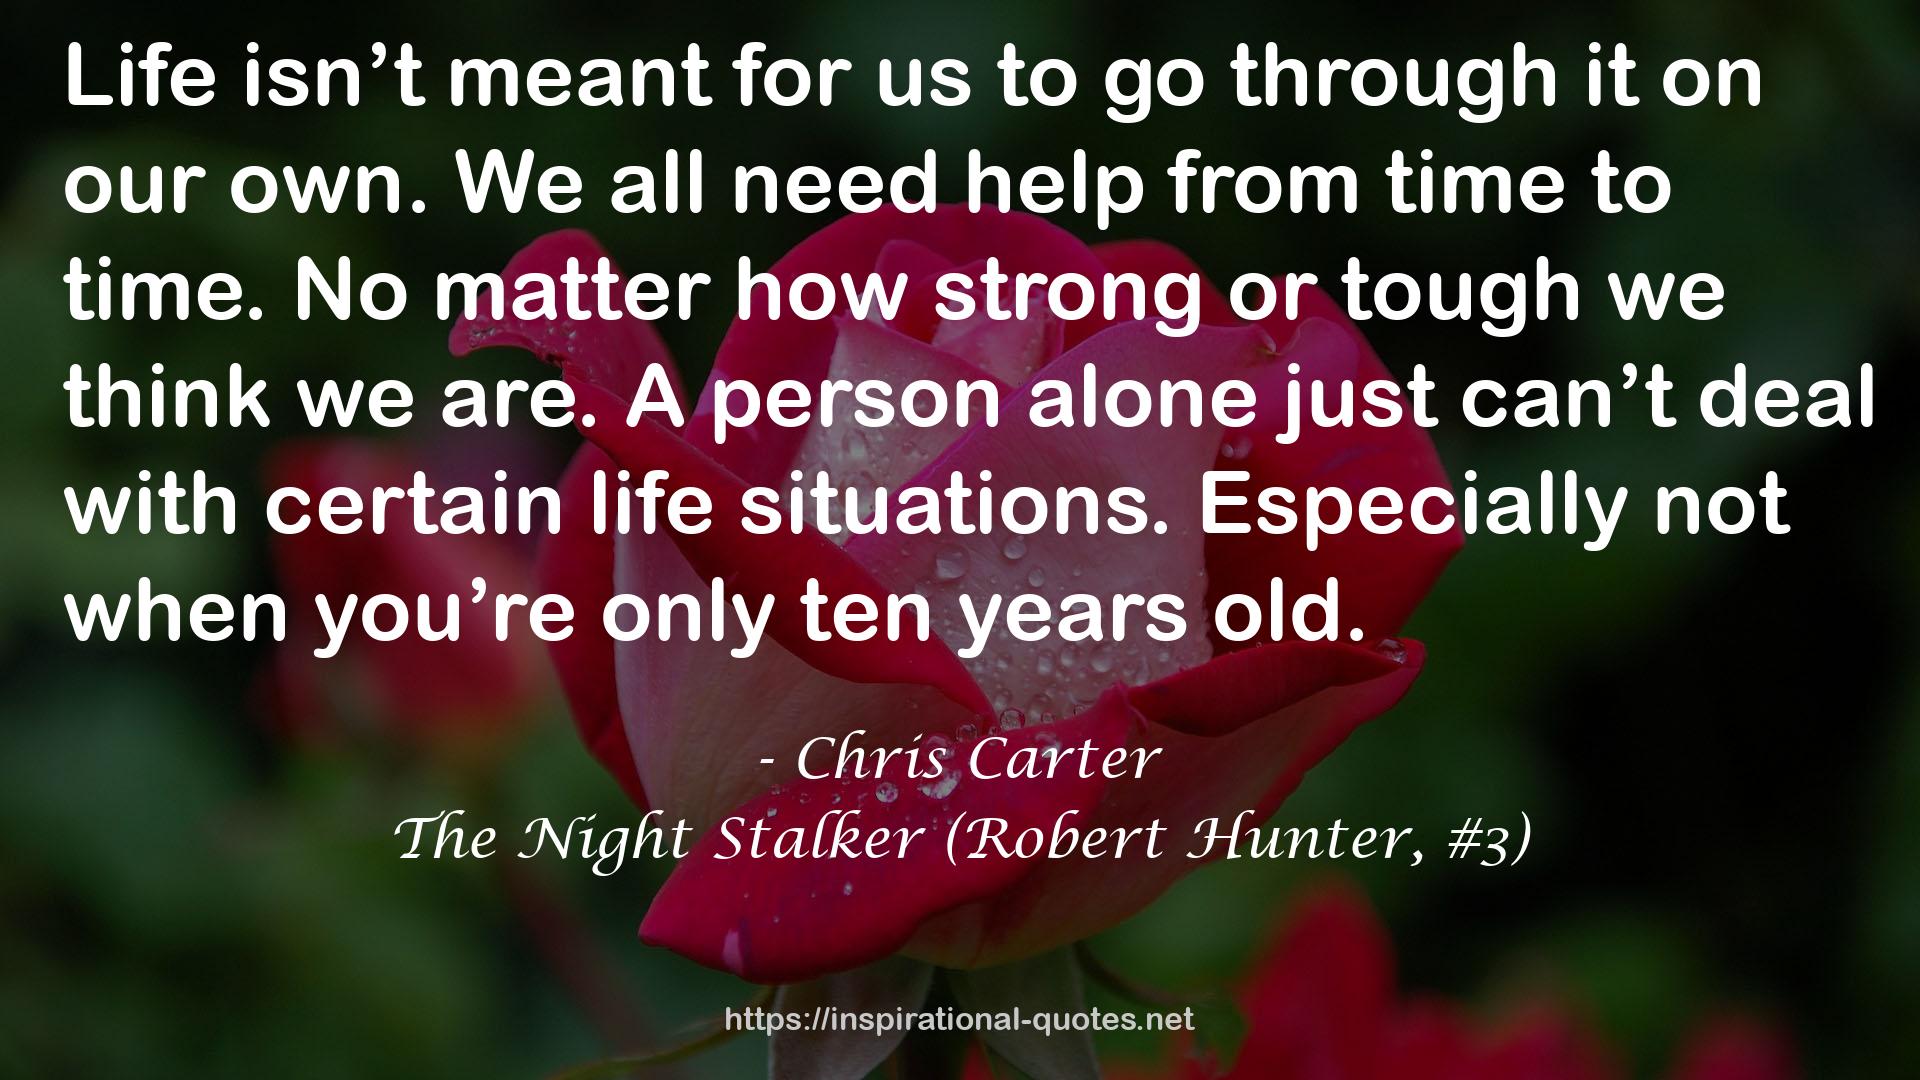 The Night Stalker (Robert Hunter, #3) QUOTES